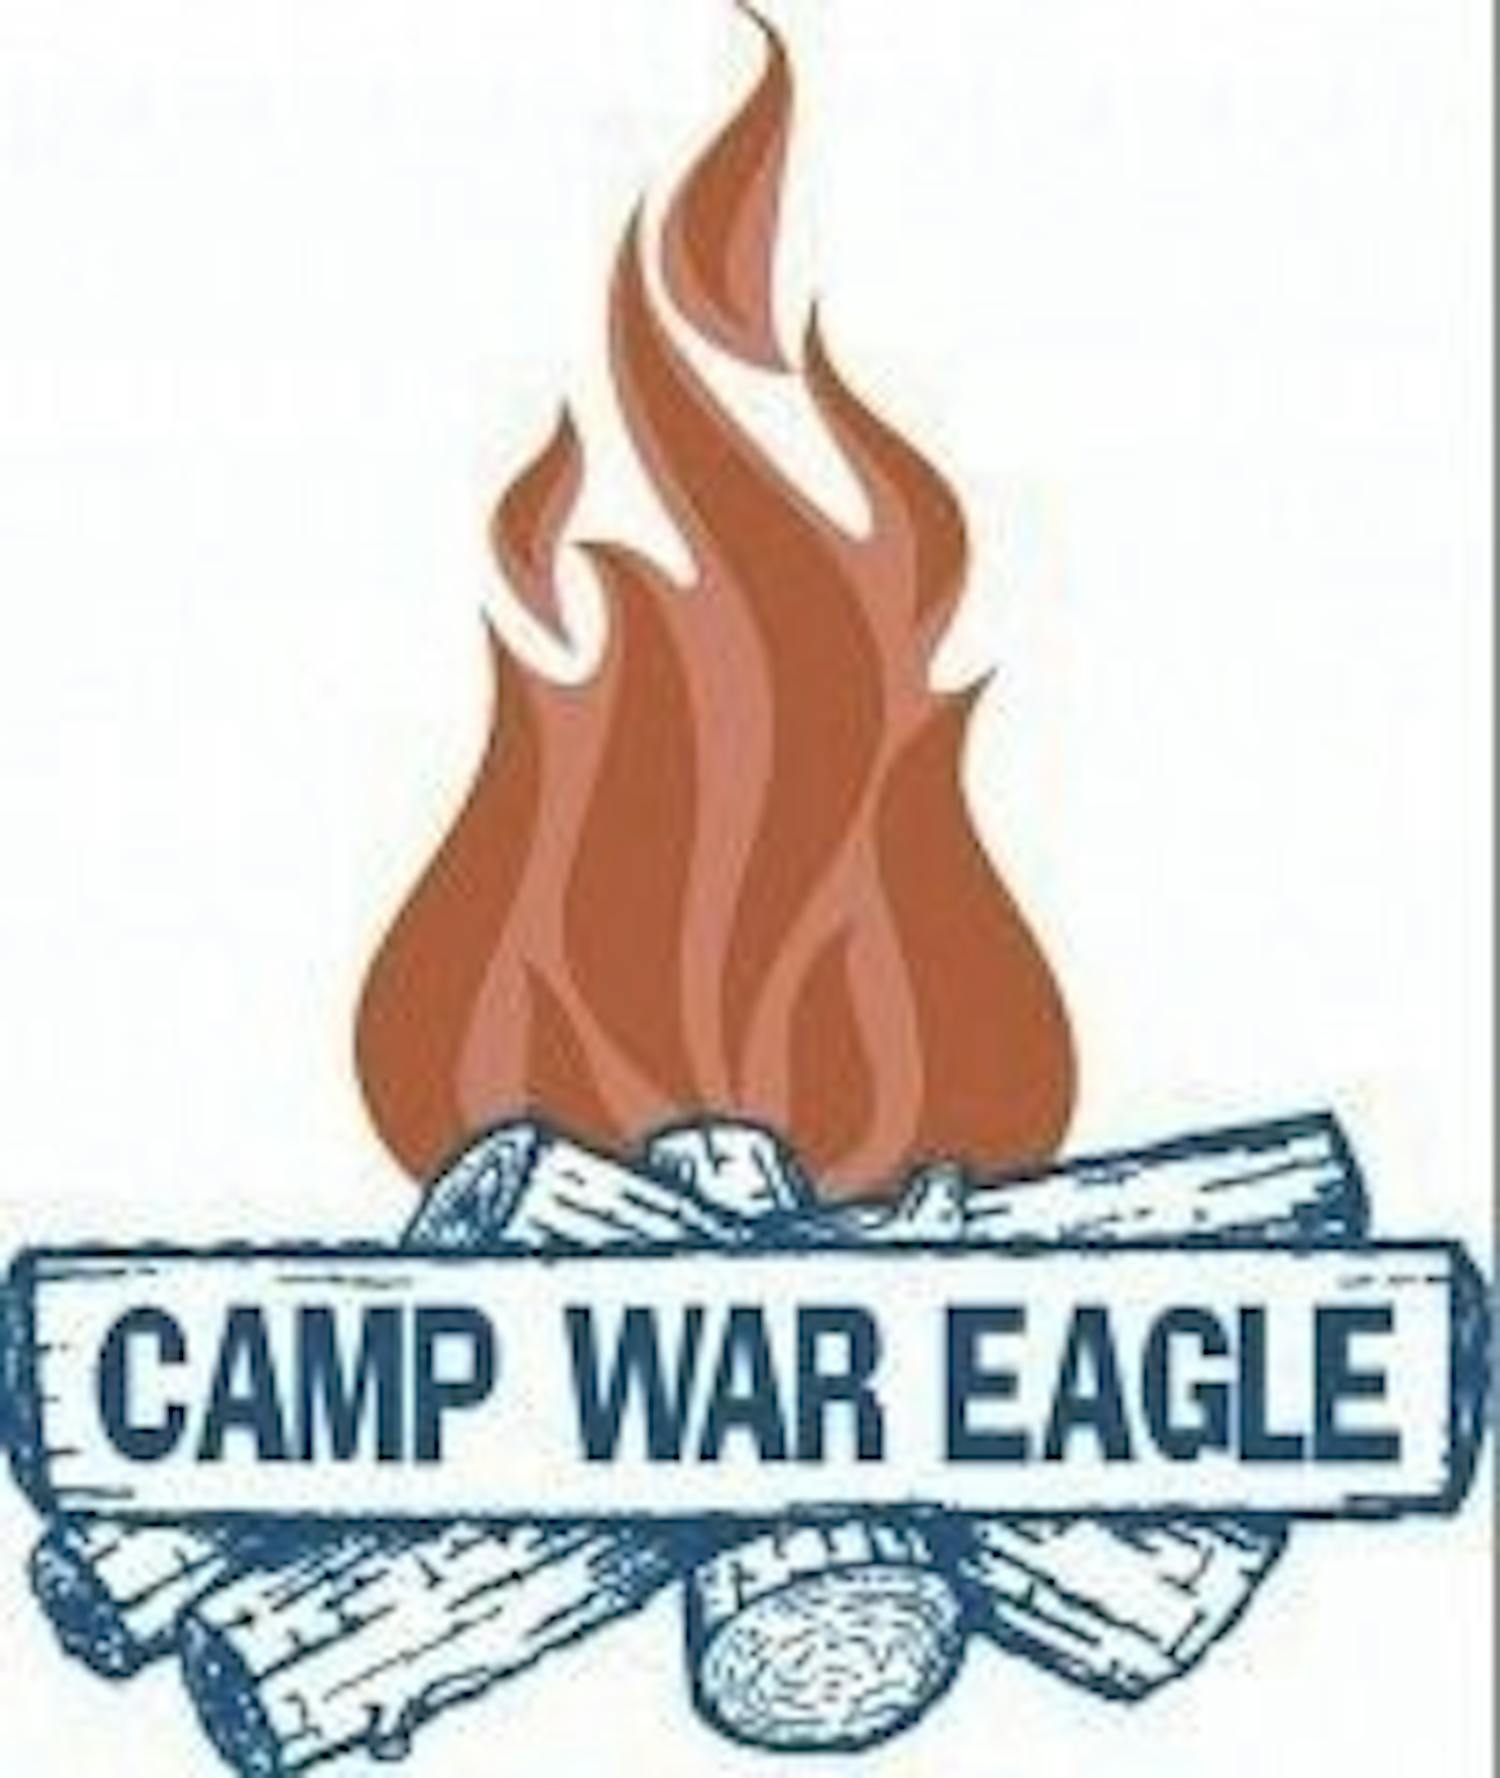 Courtesy of Camp War Eagle.